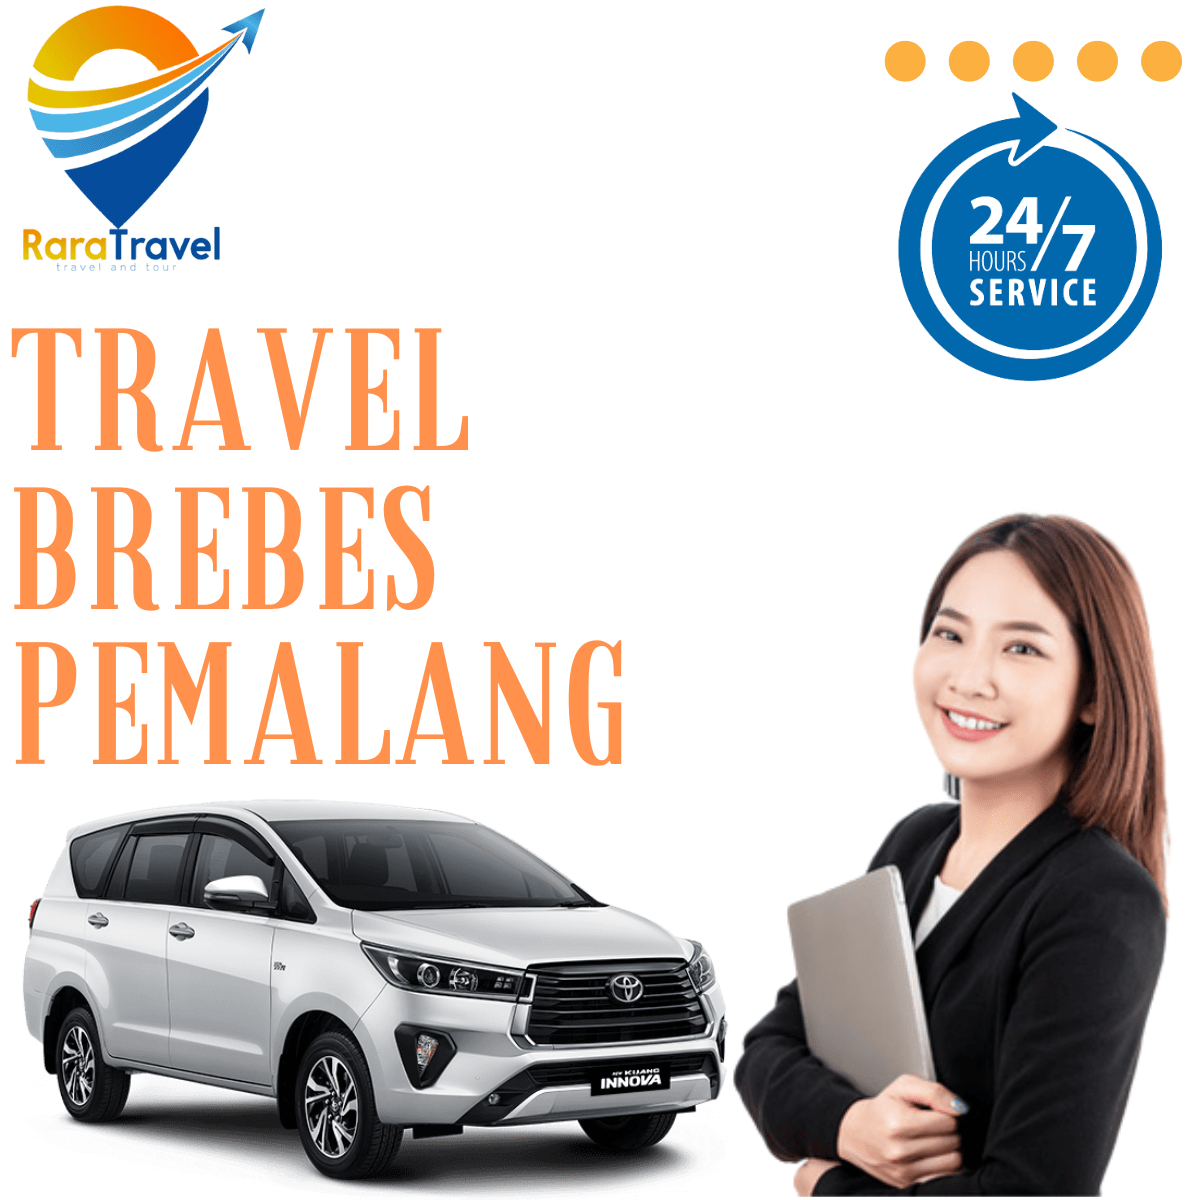 Travel Brebes Pemalang Harga Tiket Murah - RARATRAVEL.ID